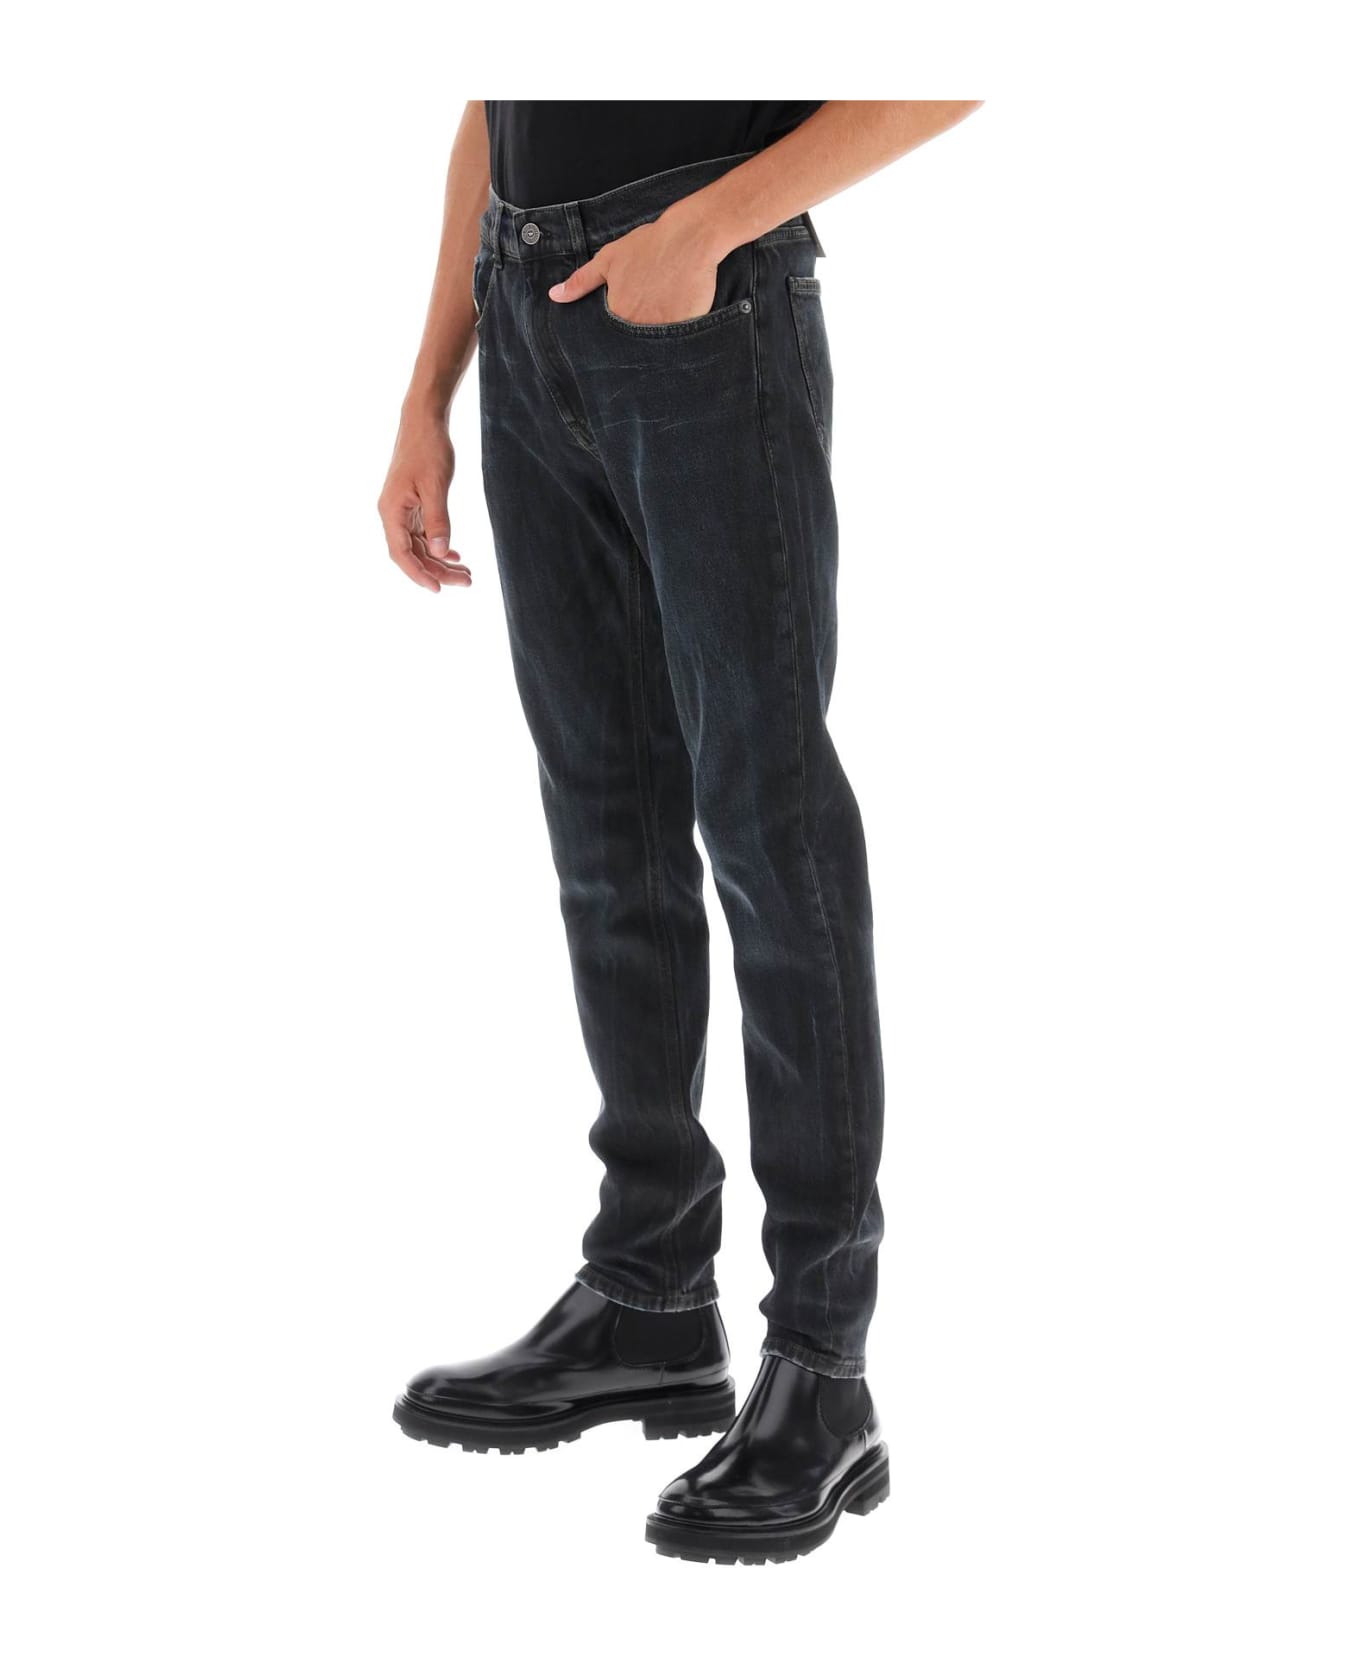 Diesel 2019 D-strukt Jeans - DEEP BLACK (Black)